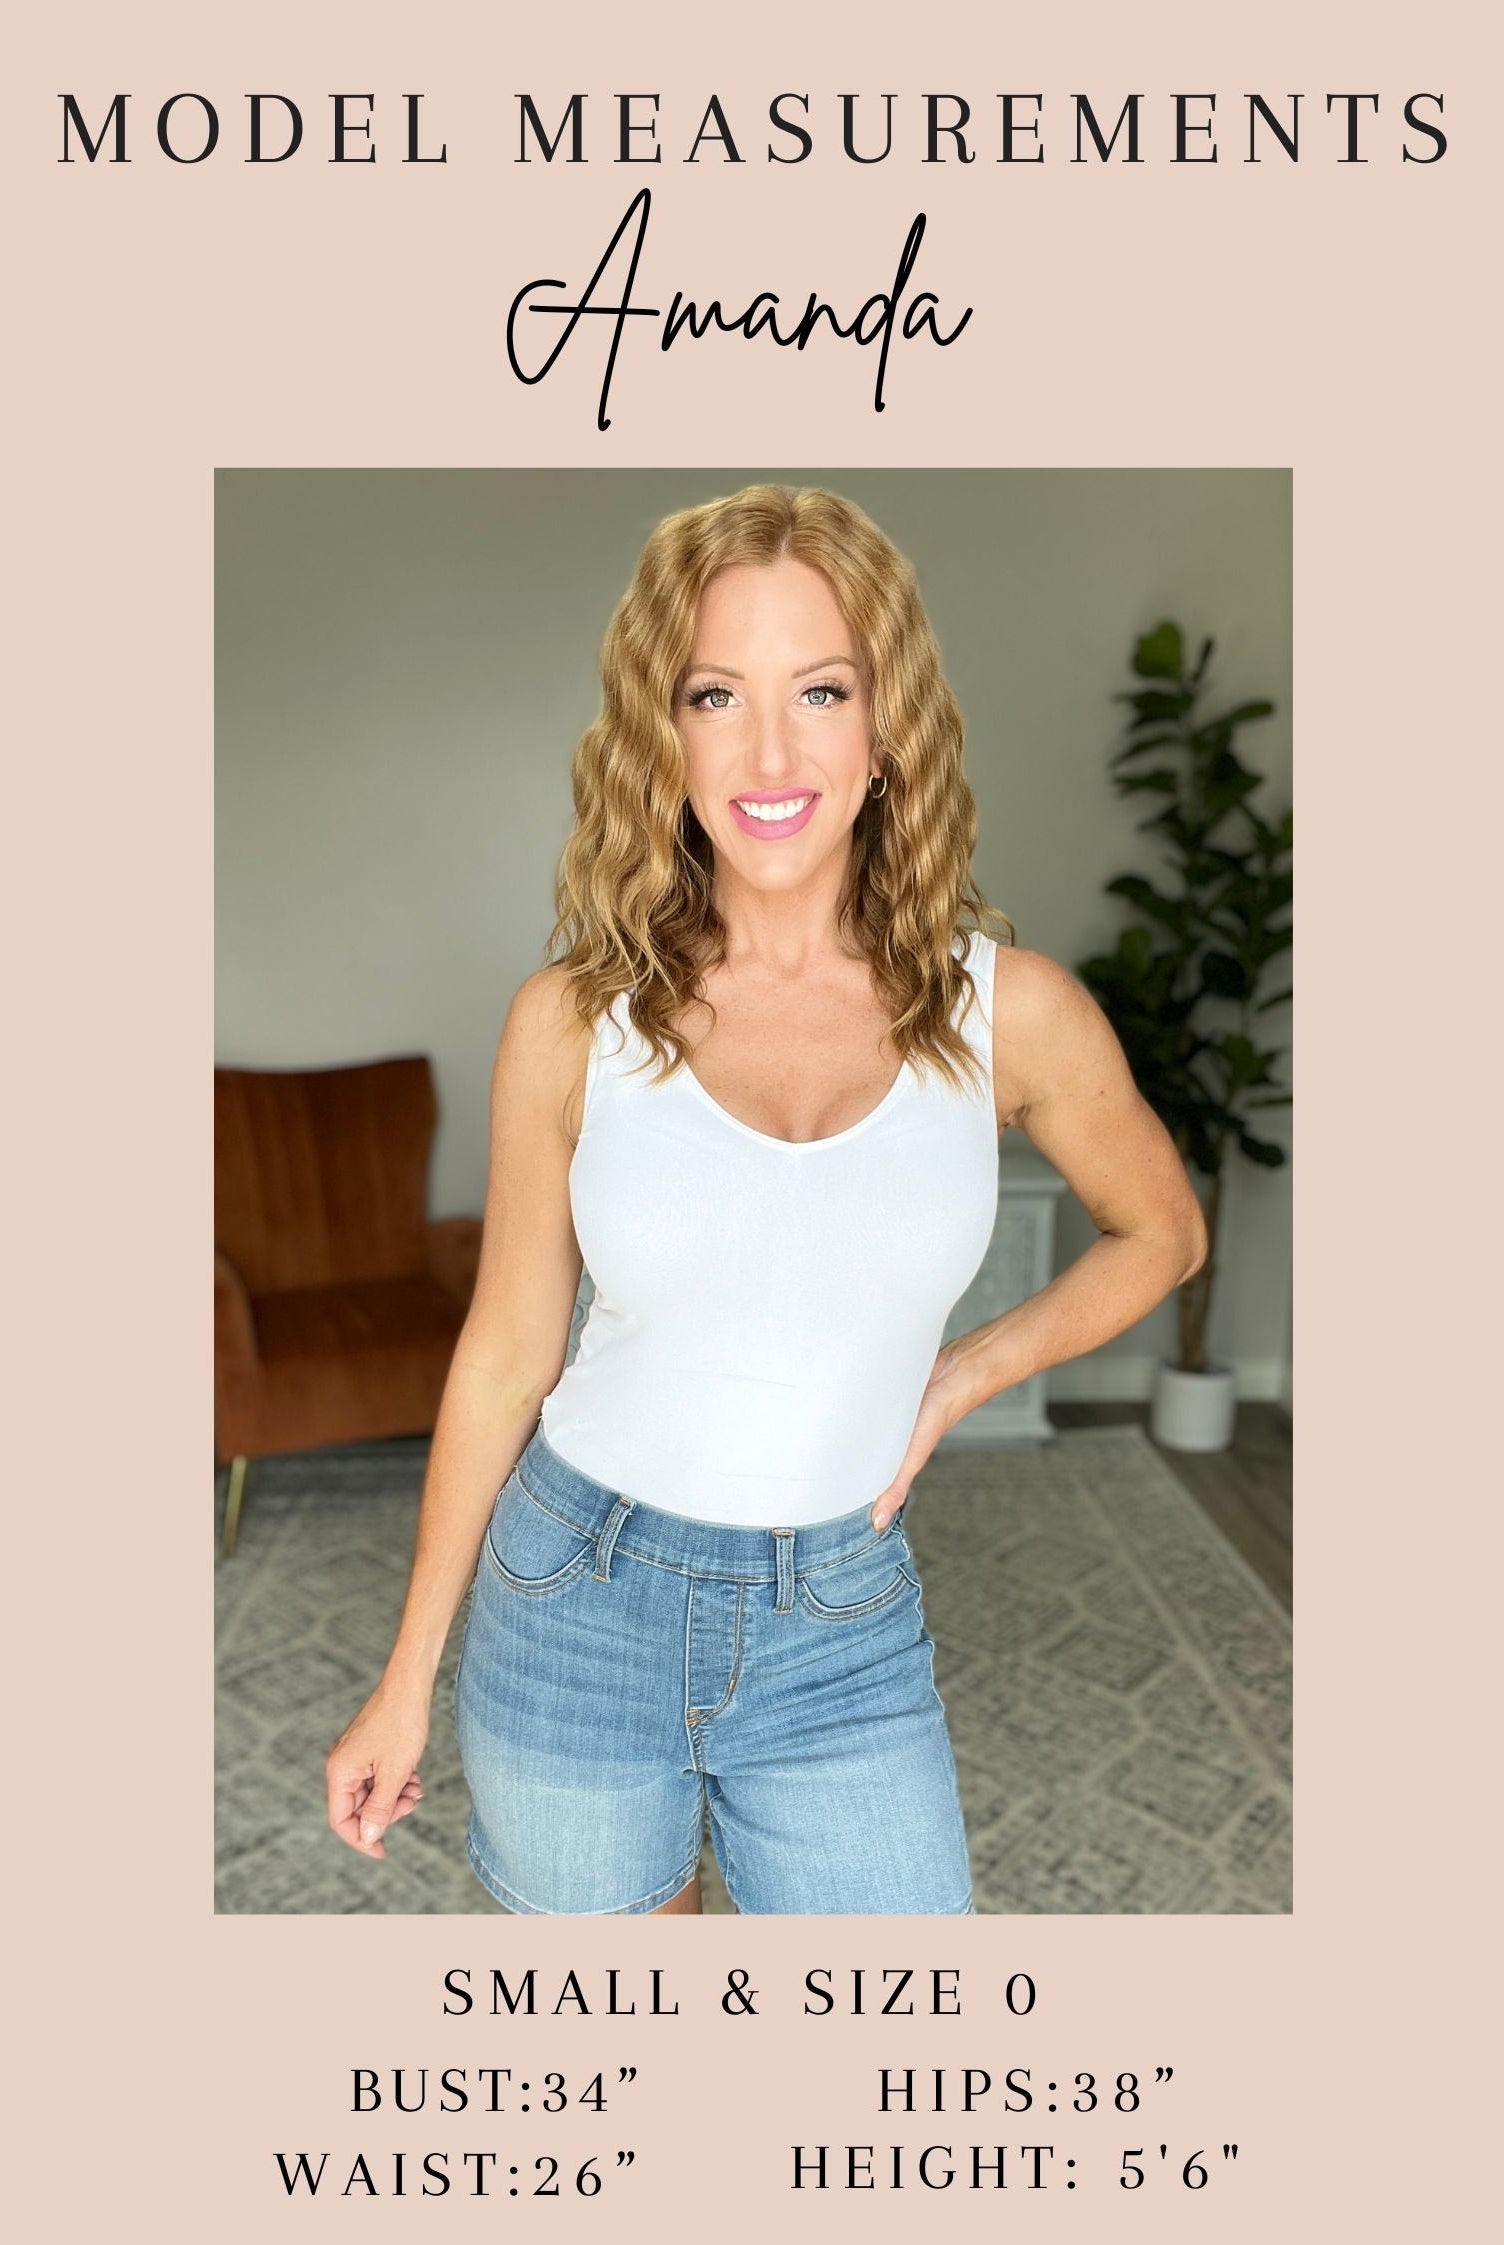 Nicole Tummy Control Skinny Jeans-Womens-Krush Kandy, Women's Online Fashion Boutique Located in Phoenix, Arizona (Scottsdale Area)